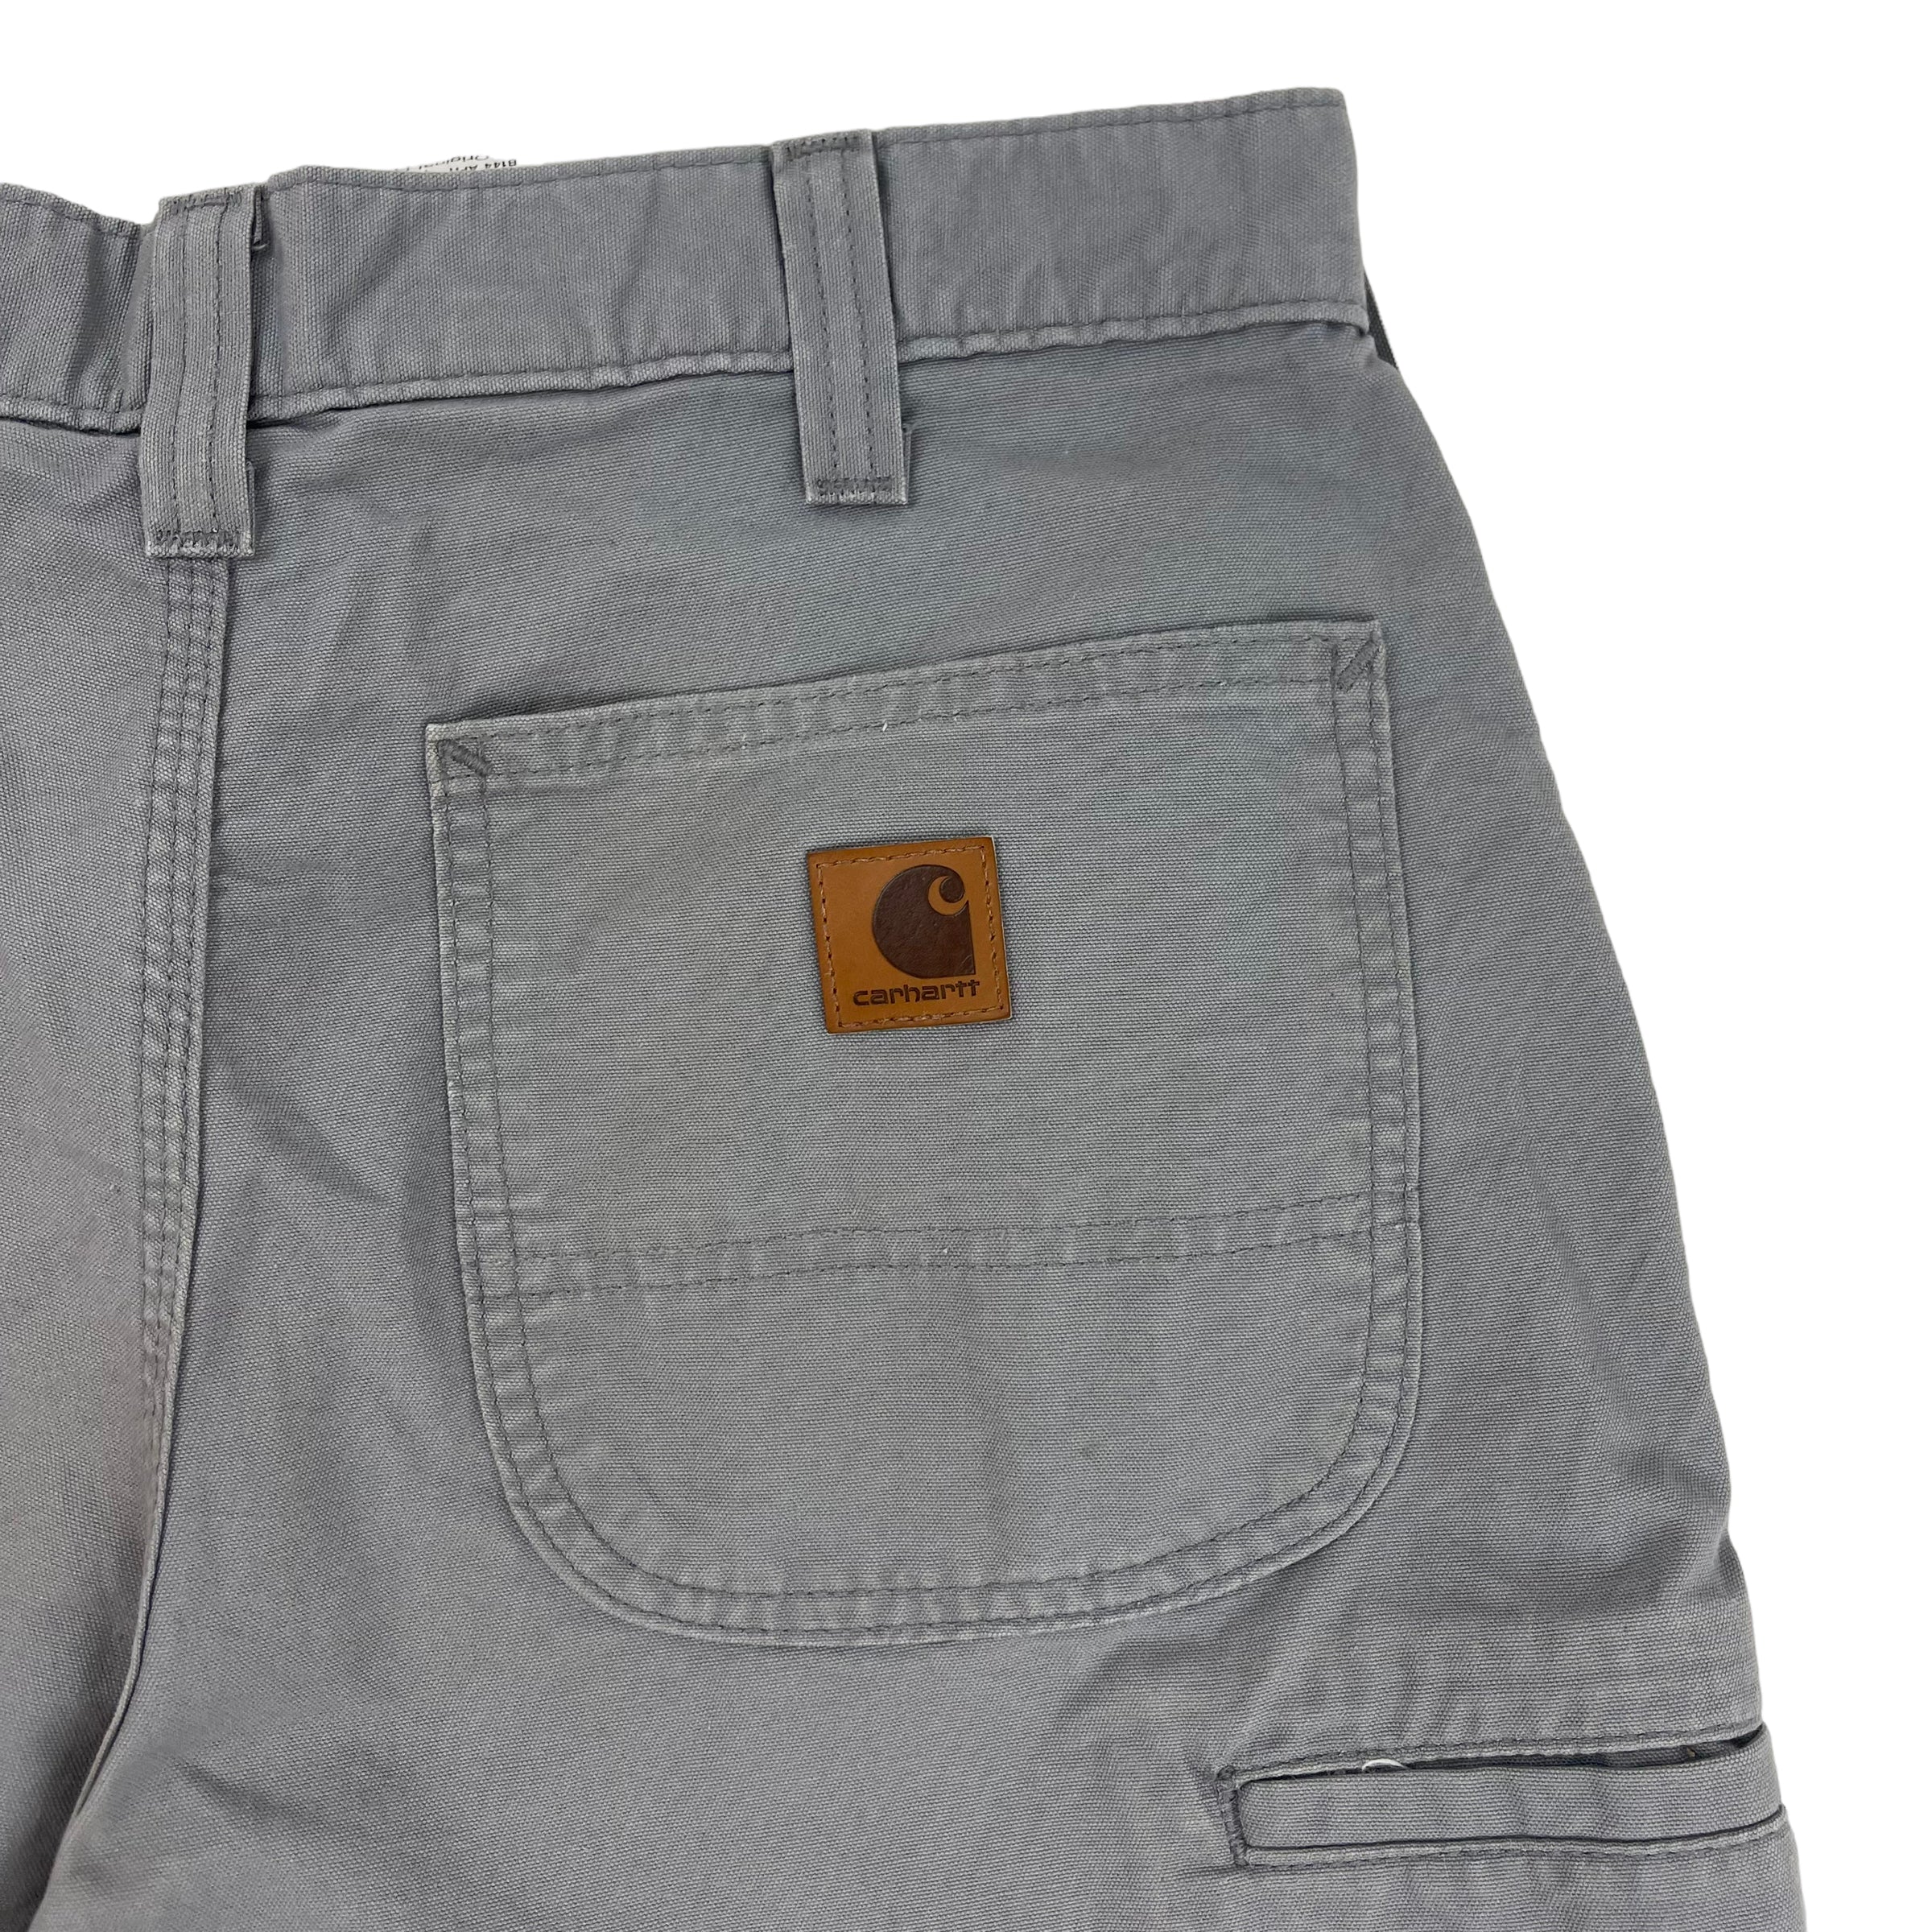 Vintage Carhartt Shorts Grey